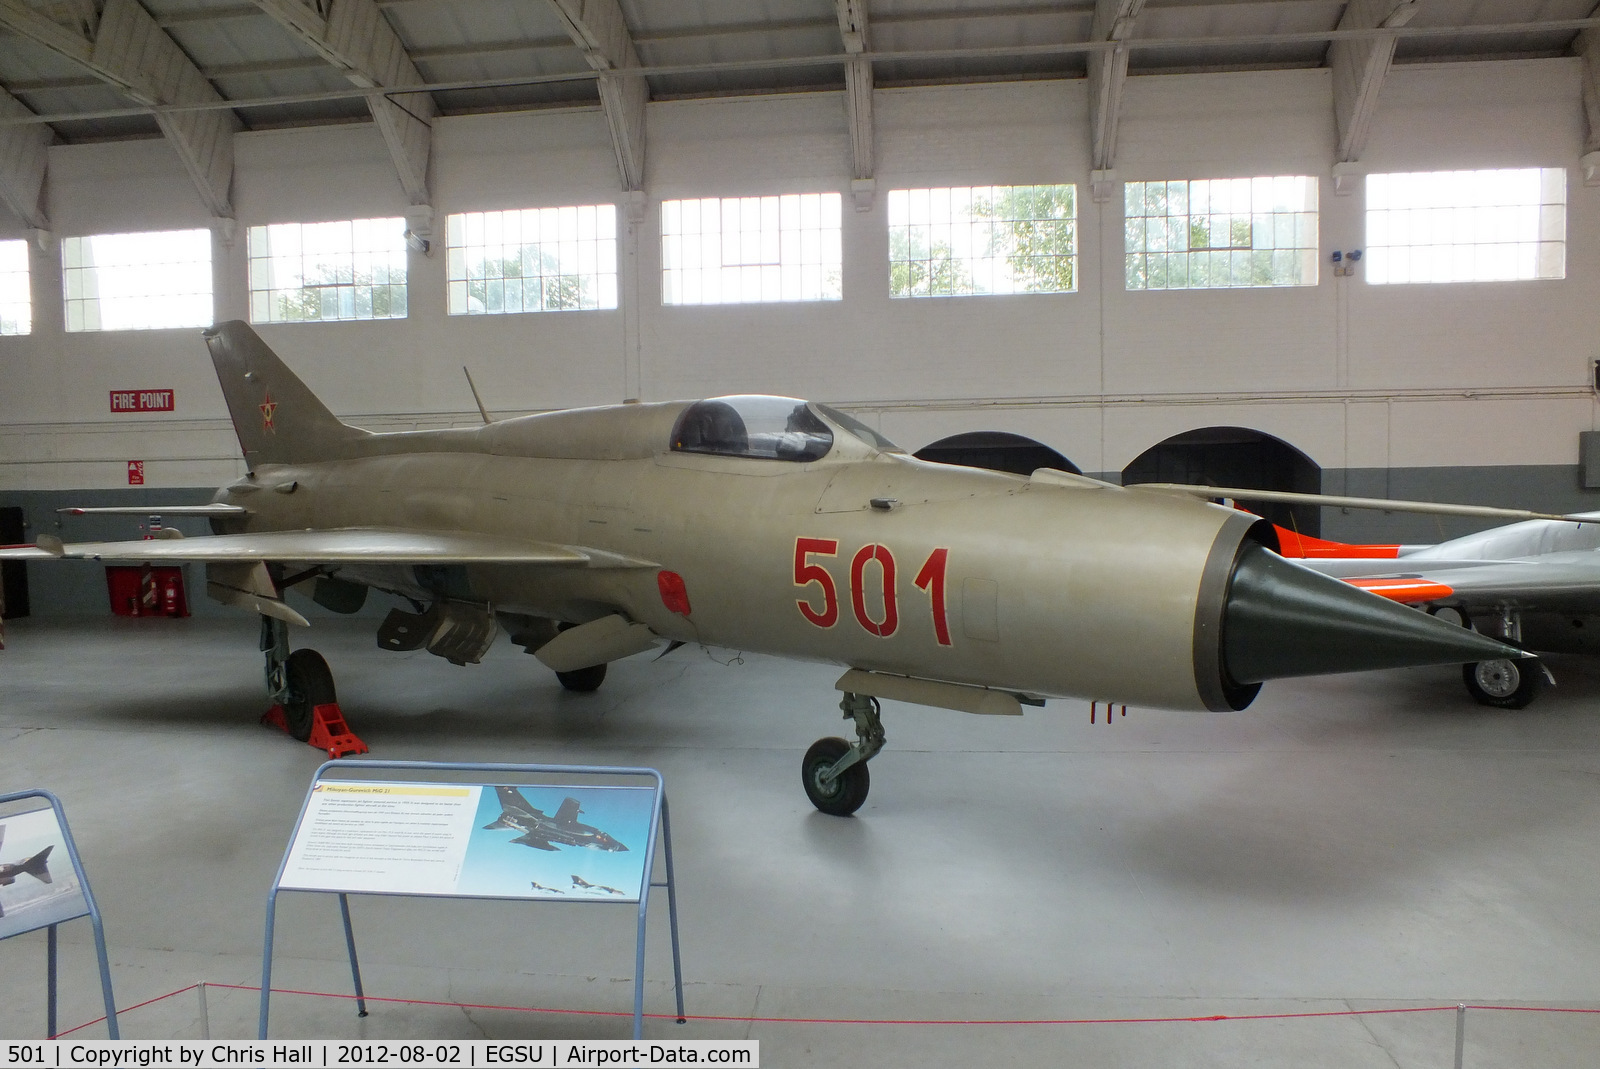 501, 1964 Mikoyan-Gurevich MiG-21PF C/N 760501, ex Hungarian Air Force MiG-21PF, displayed in Hangar 4 at the IWM Duxford